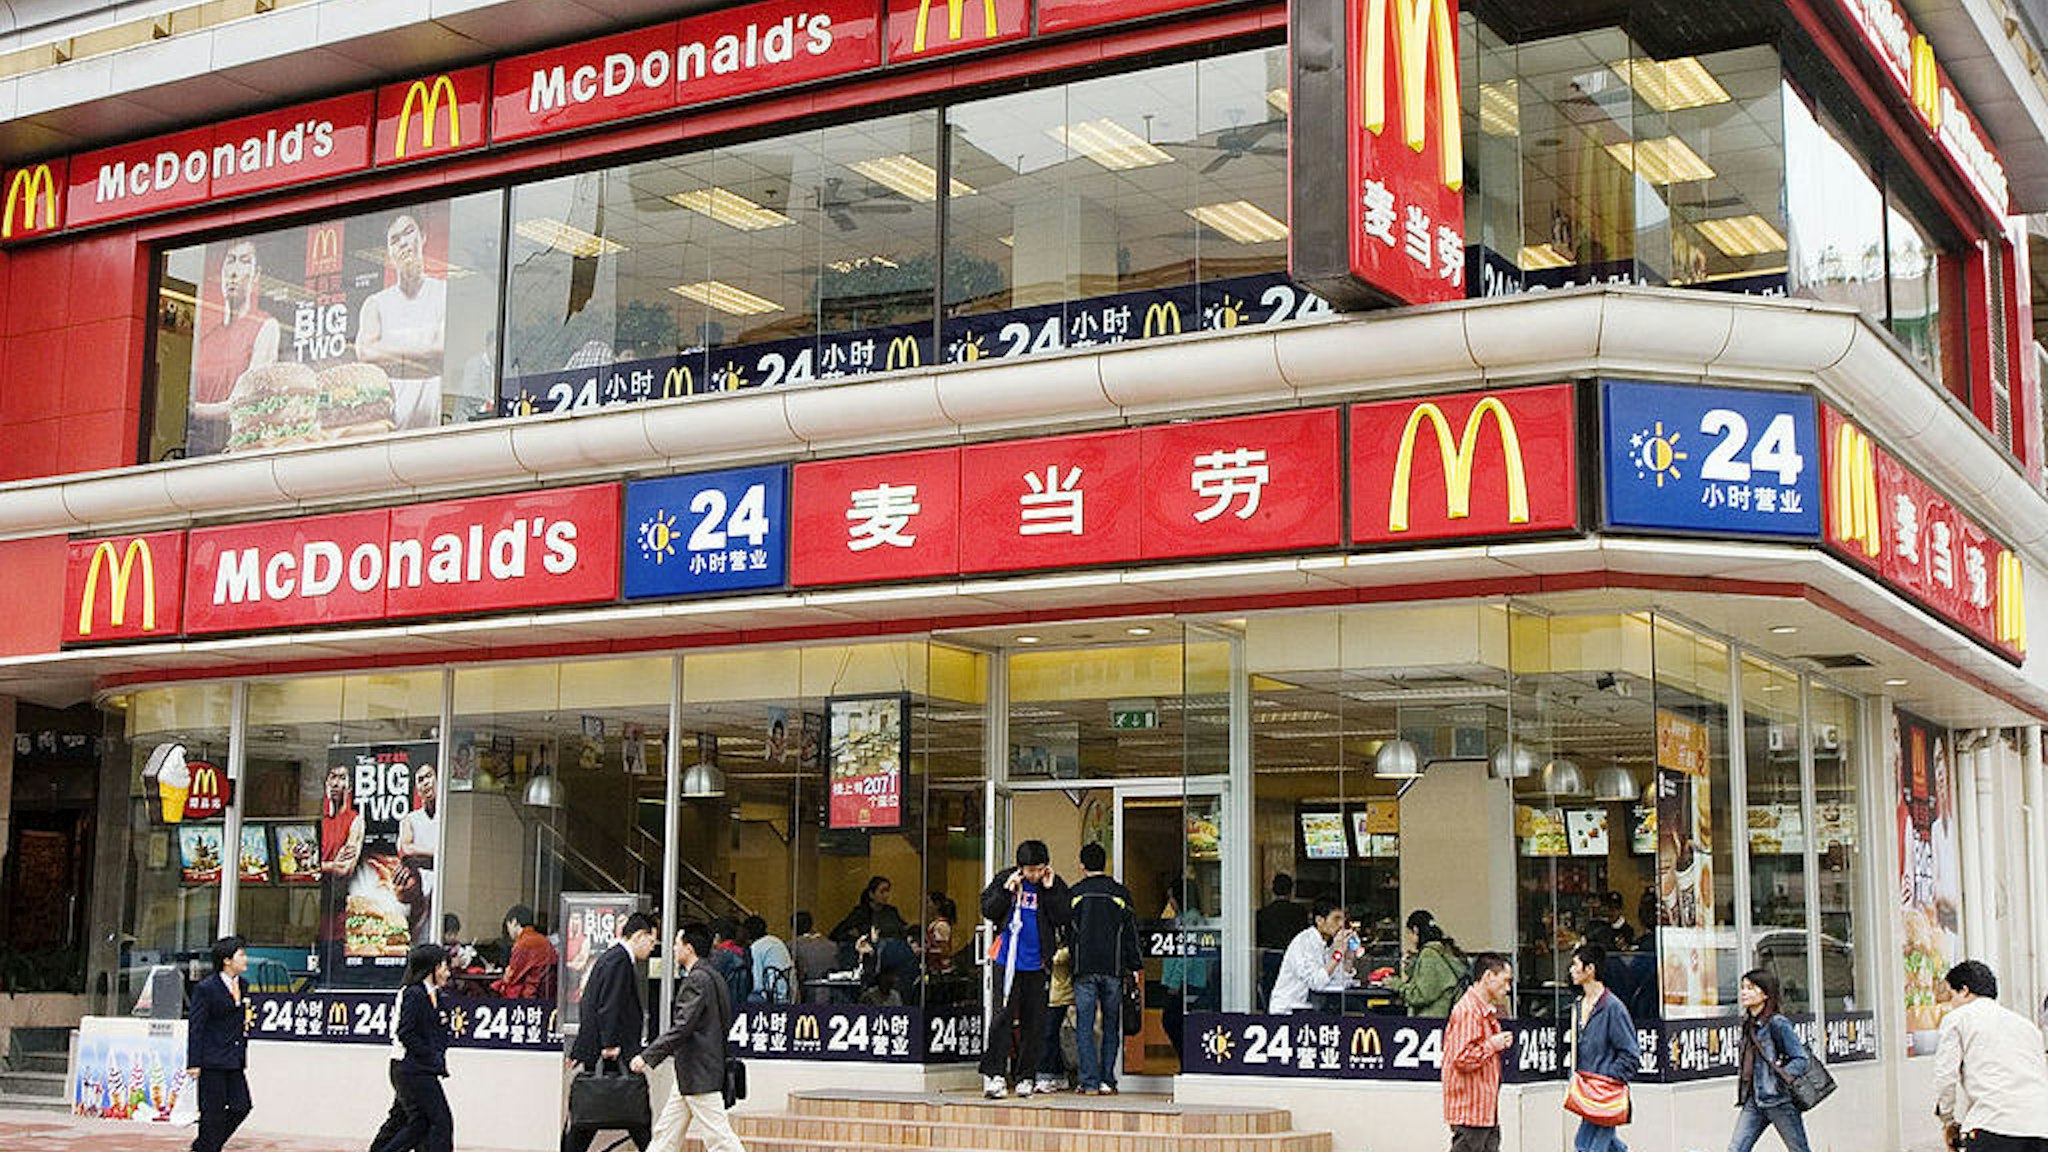 Tianhe McDonald's, Guangzhou, China, on Wednesday, April 4, 2007.